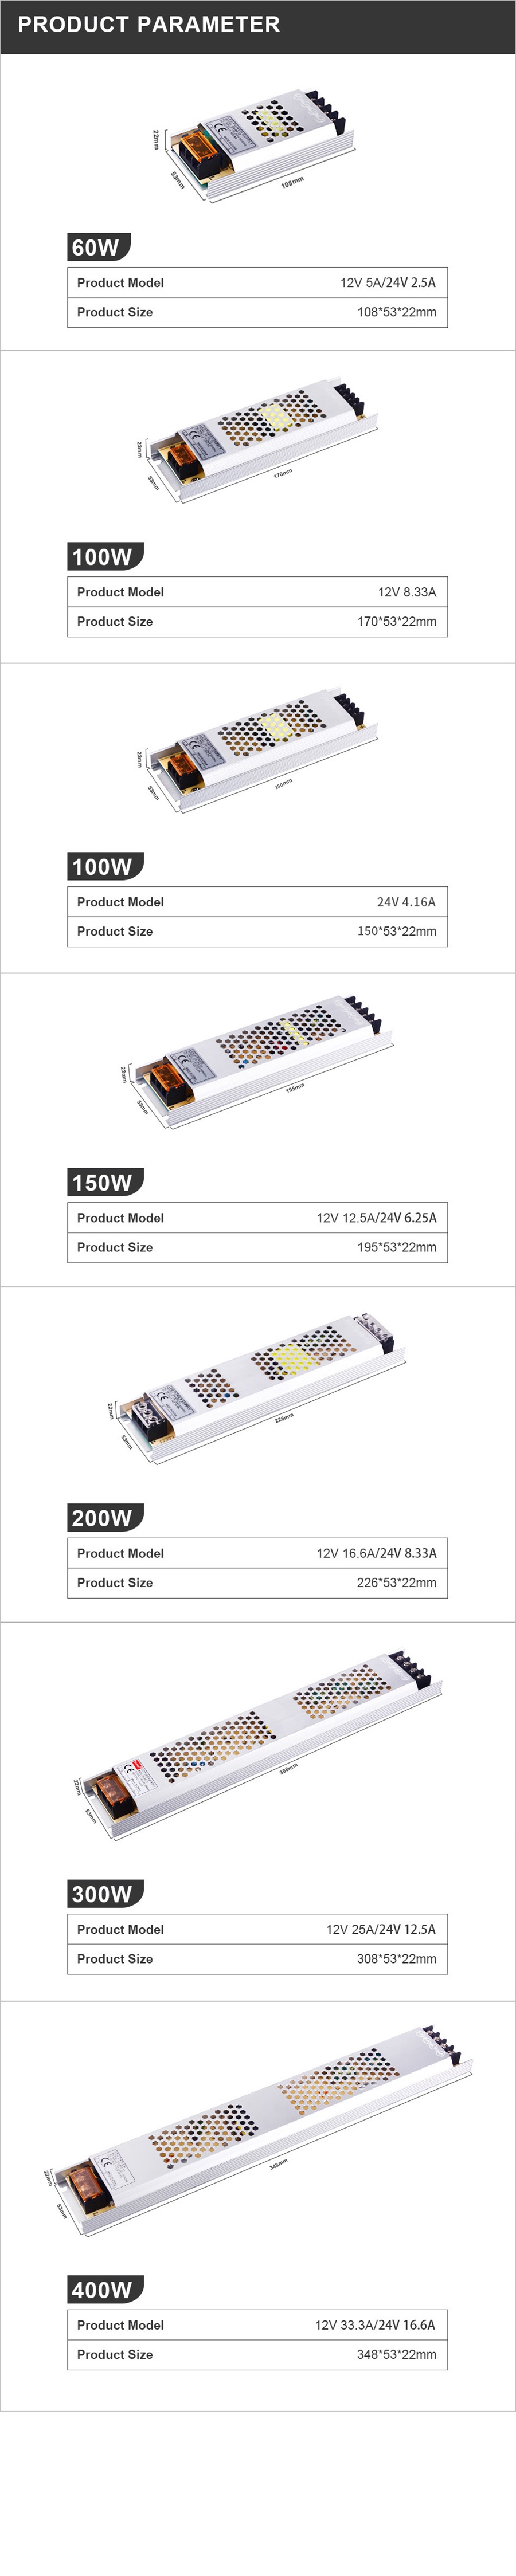 LED power supply lighting transformers